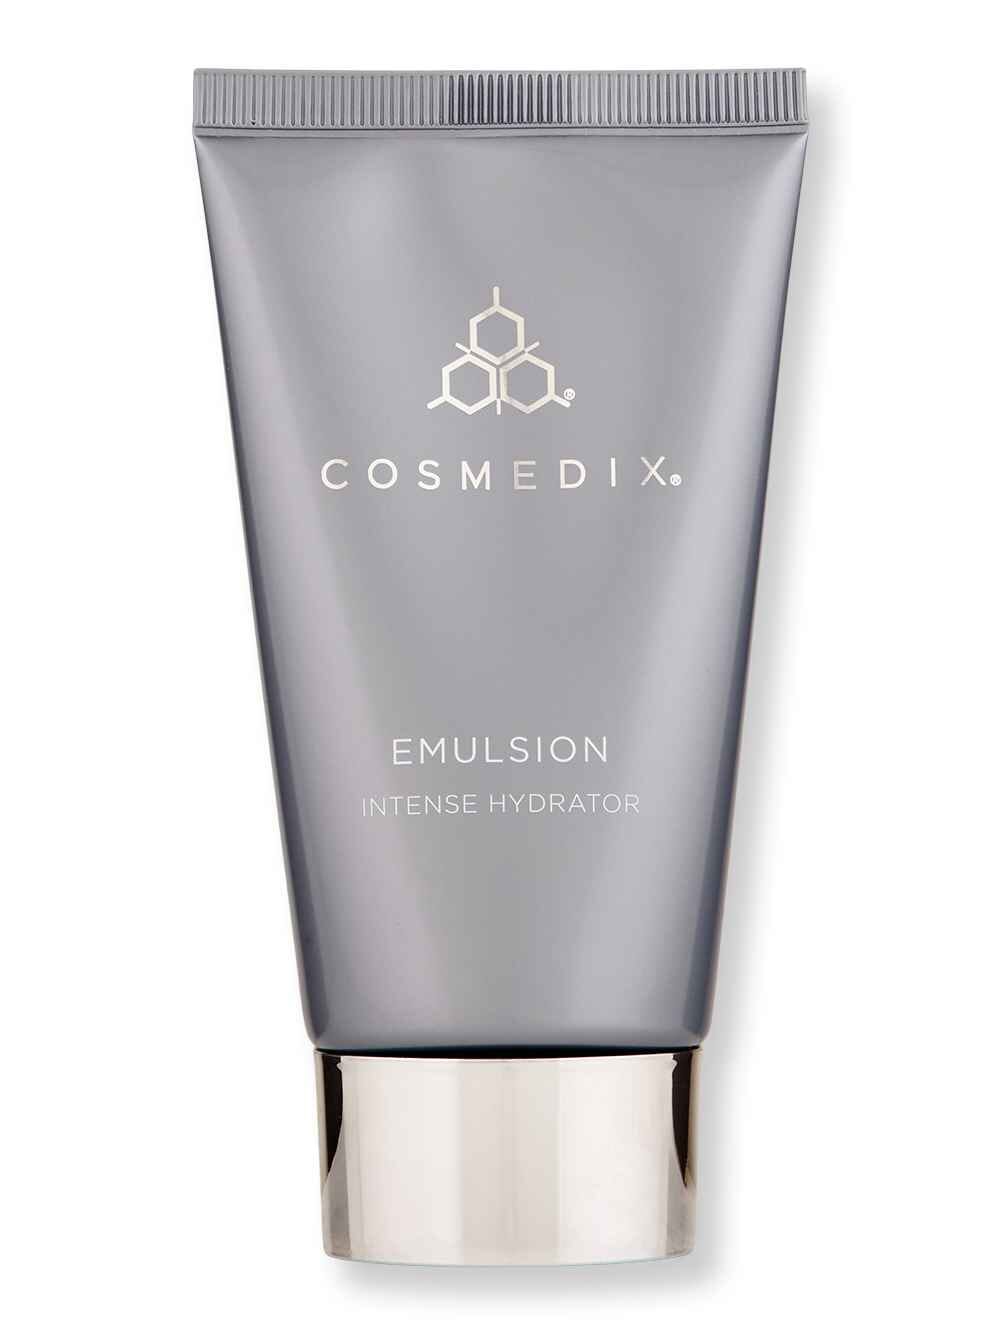 Cosmedix Cosmedix Emulsion 2 oz60 g Face Moisturizers 